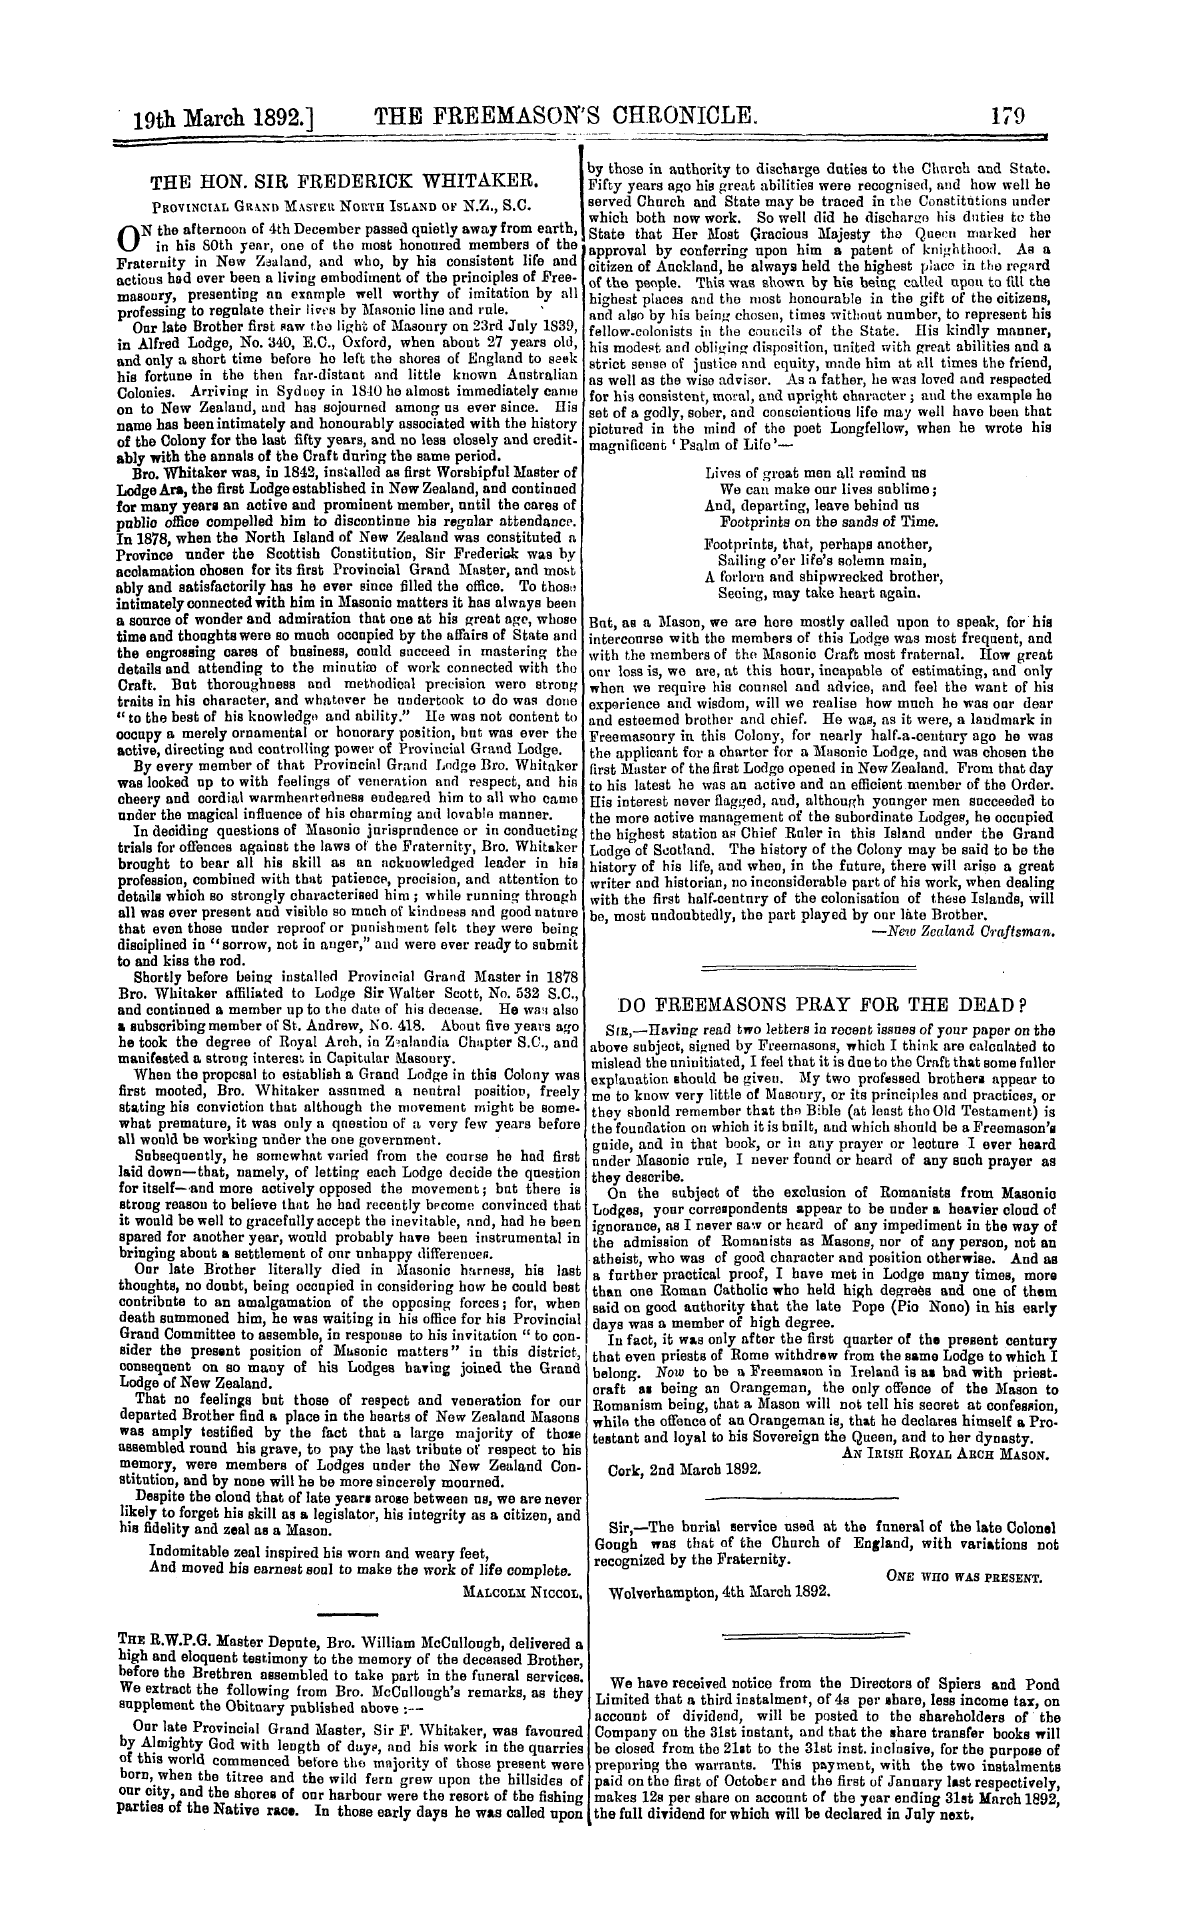 The Freemason's Chronicle: 1892-03-19 - The Hon. Sir Frederick Whitaker.